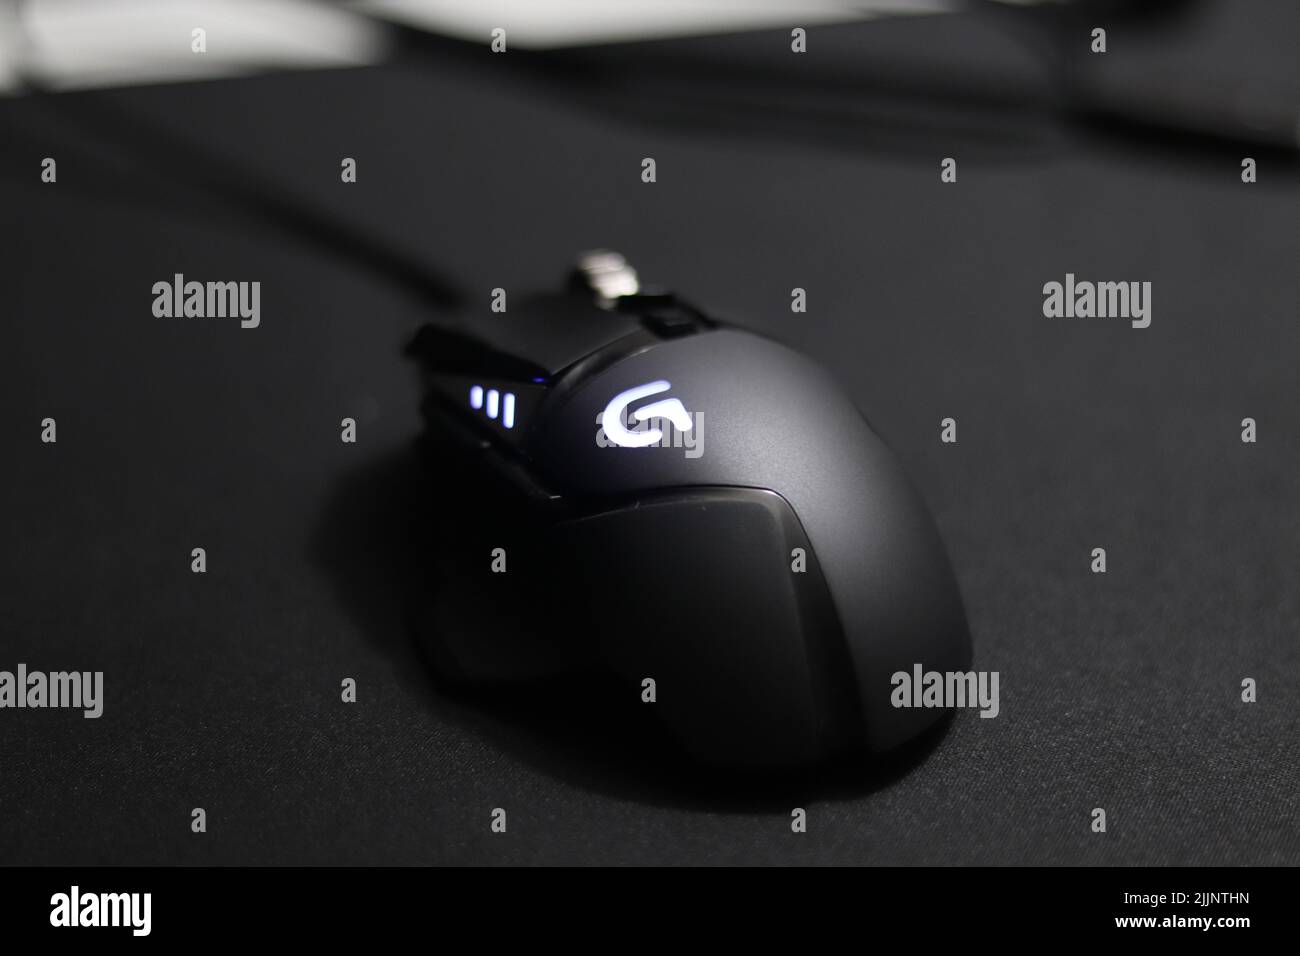 Logitech G502 Lightspeed Wireless Gaming Mouse Unboxing - ASMR 